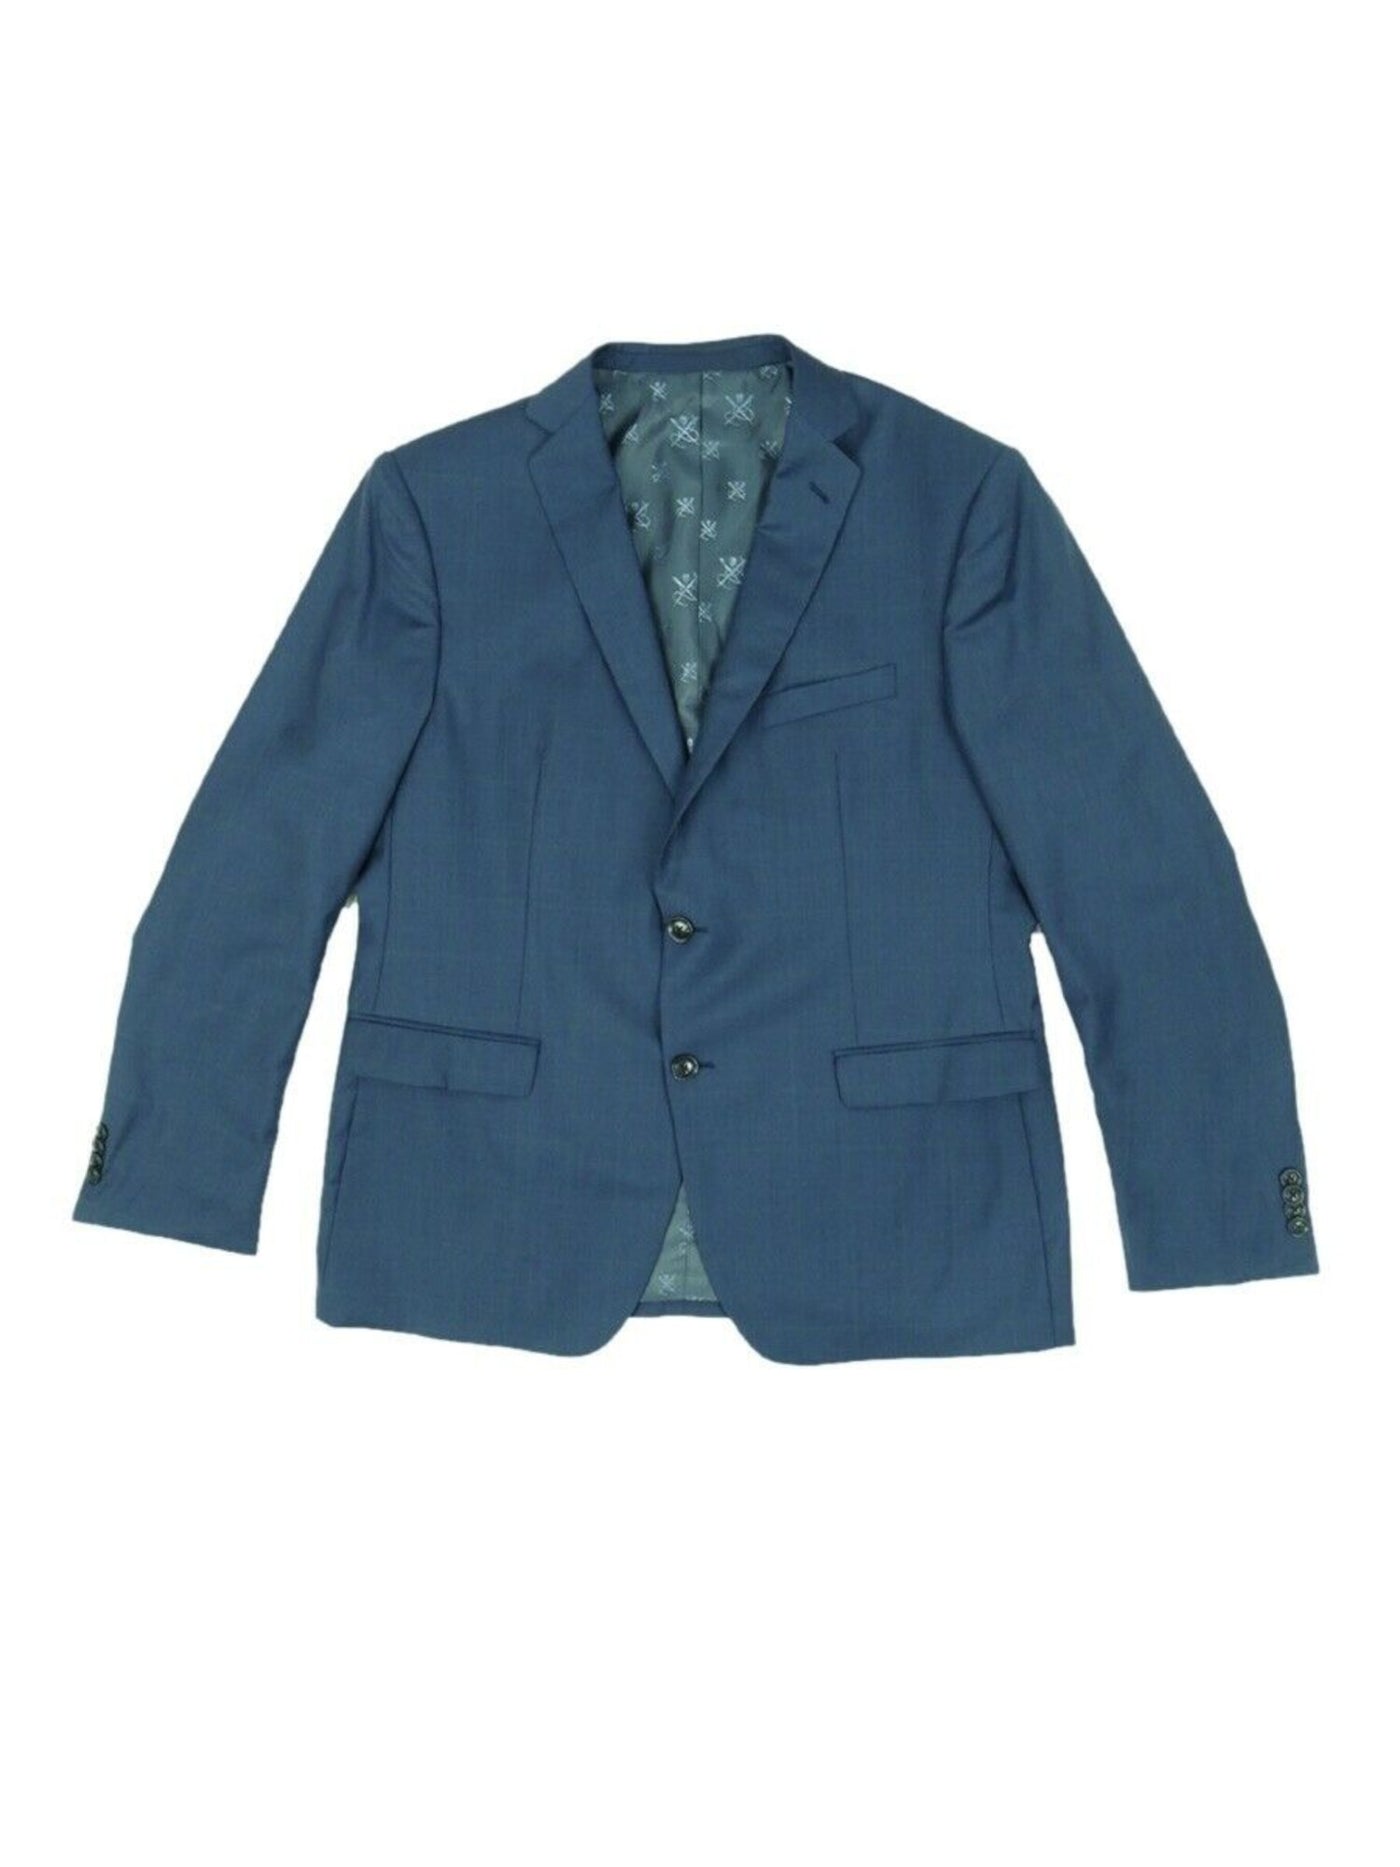 John Varvatos Mens Navy Single Breasted, Classic Fit Wool Blend Suit Separate Blazer Jacket 44R